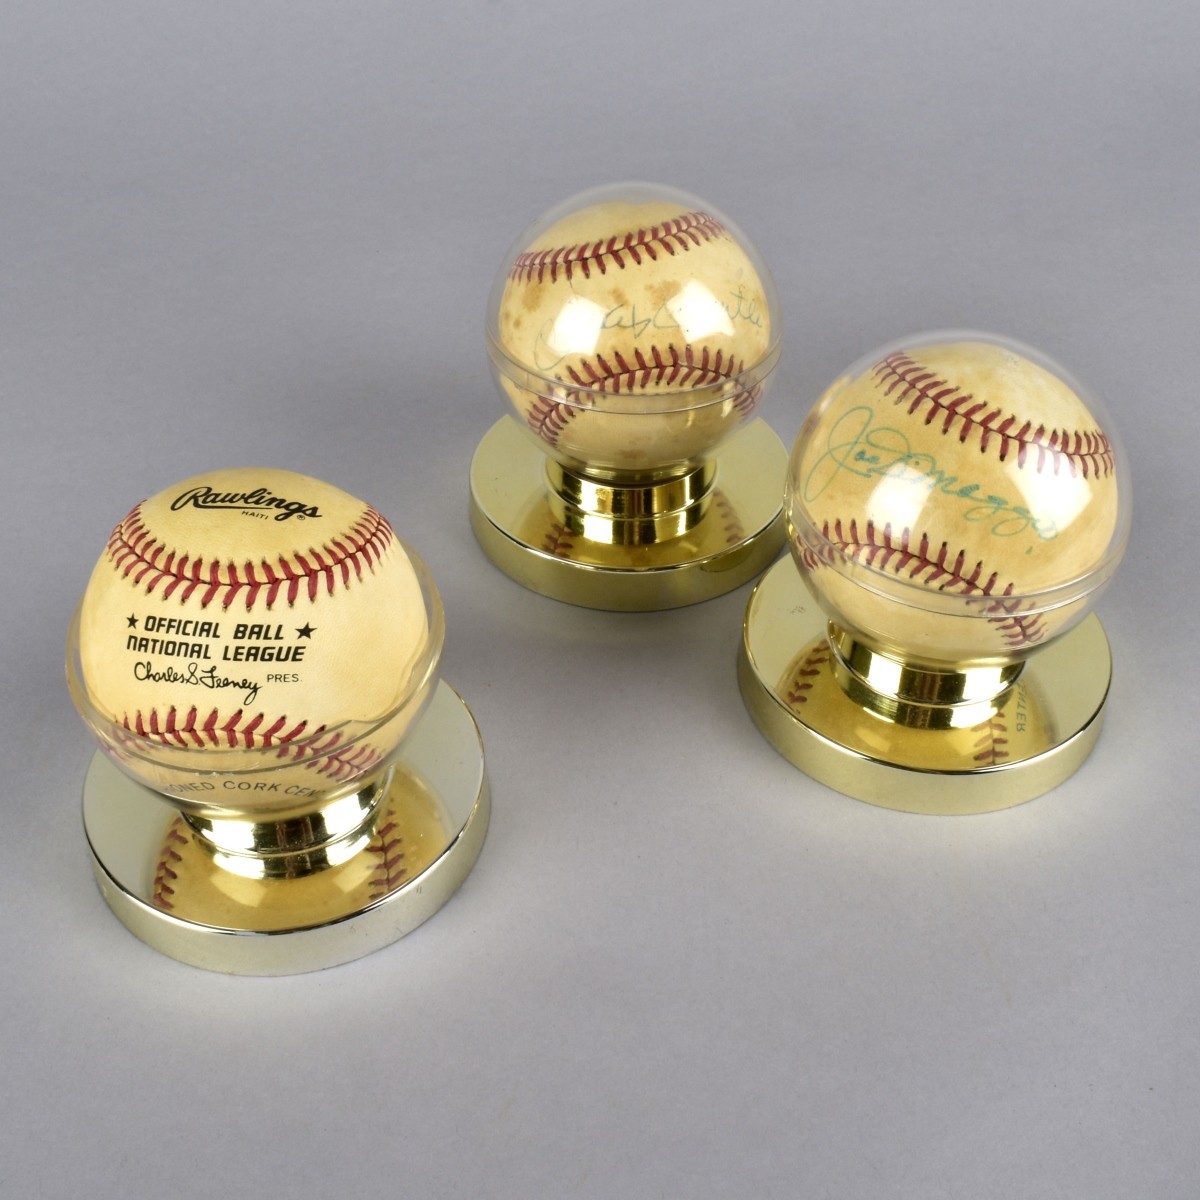 Three Autographed Baseballs